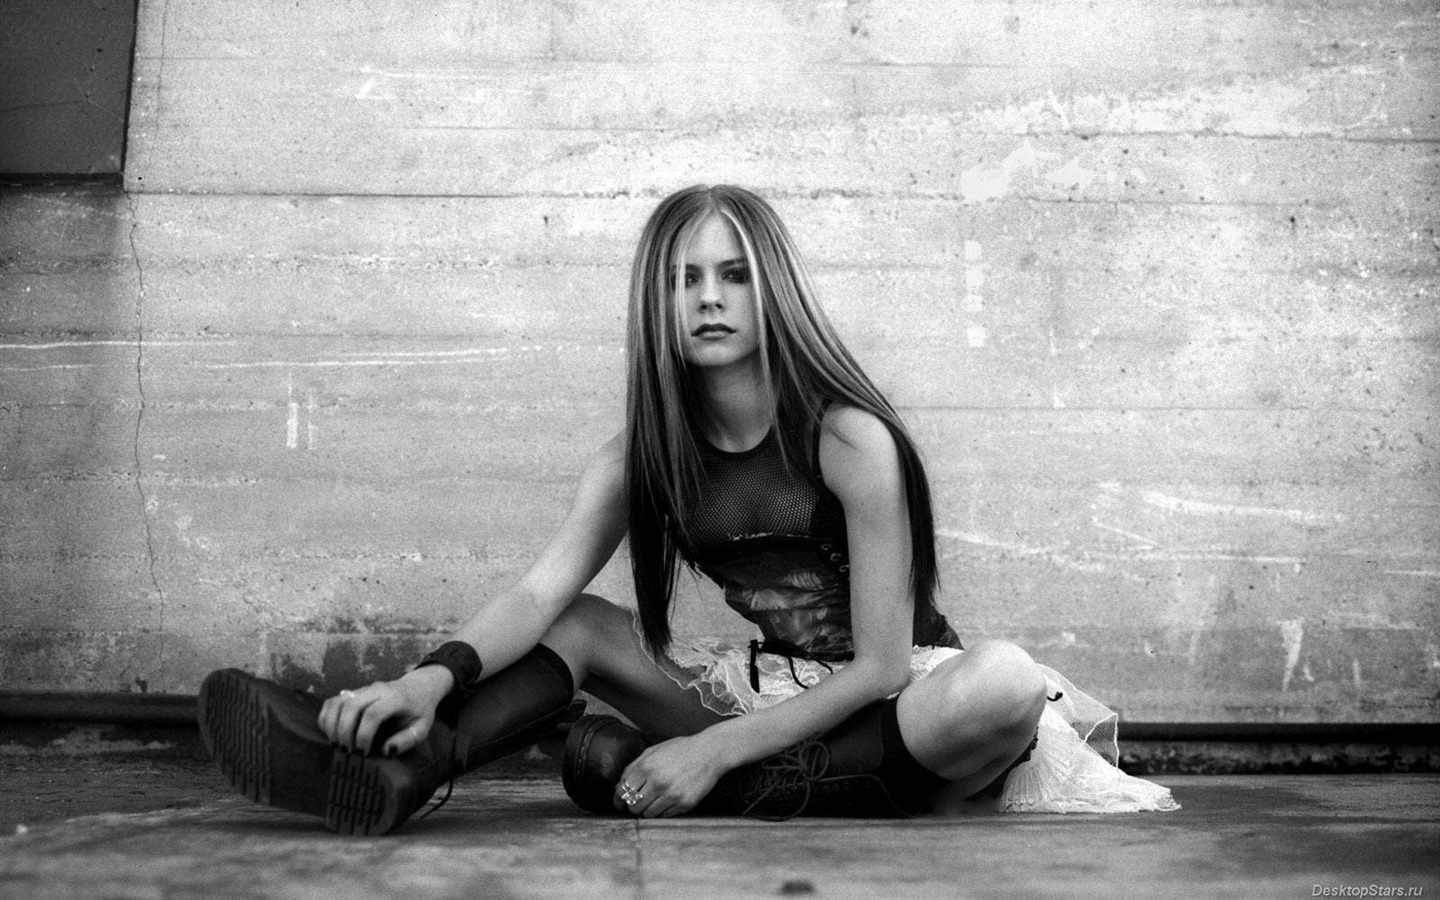 Avril Lavigne beautiful wallpaper (3) #7 - 1440x900